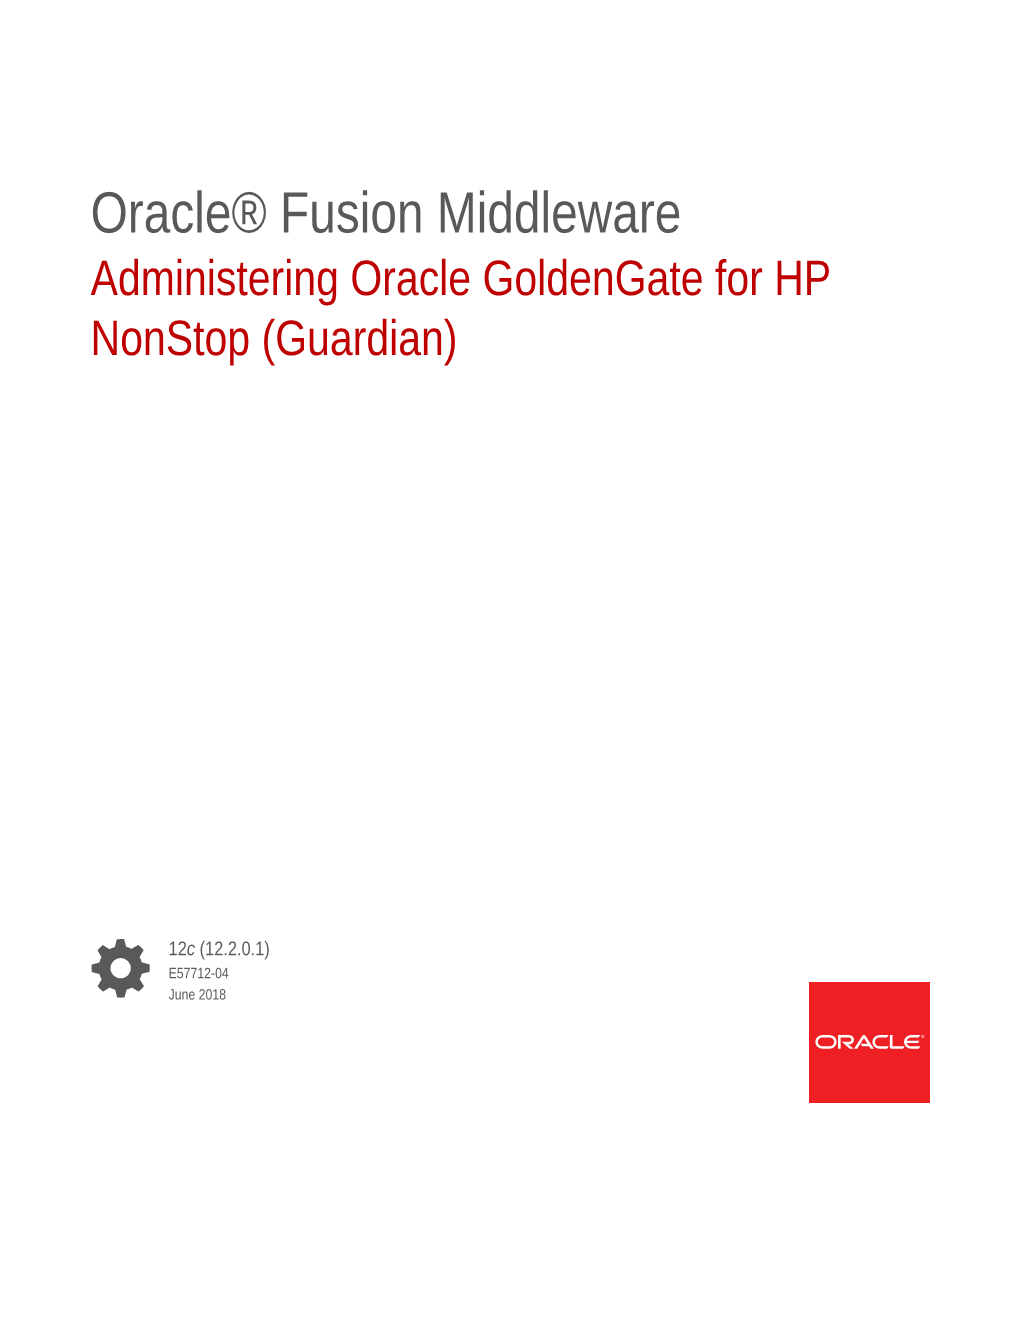 Administering Oracle Goldengate for HP Nonstop (Guardian)